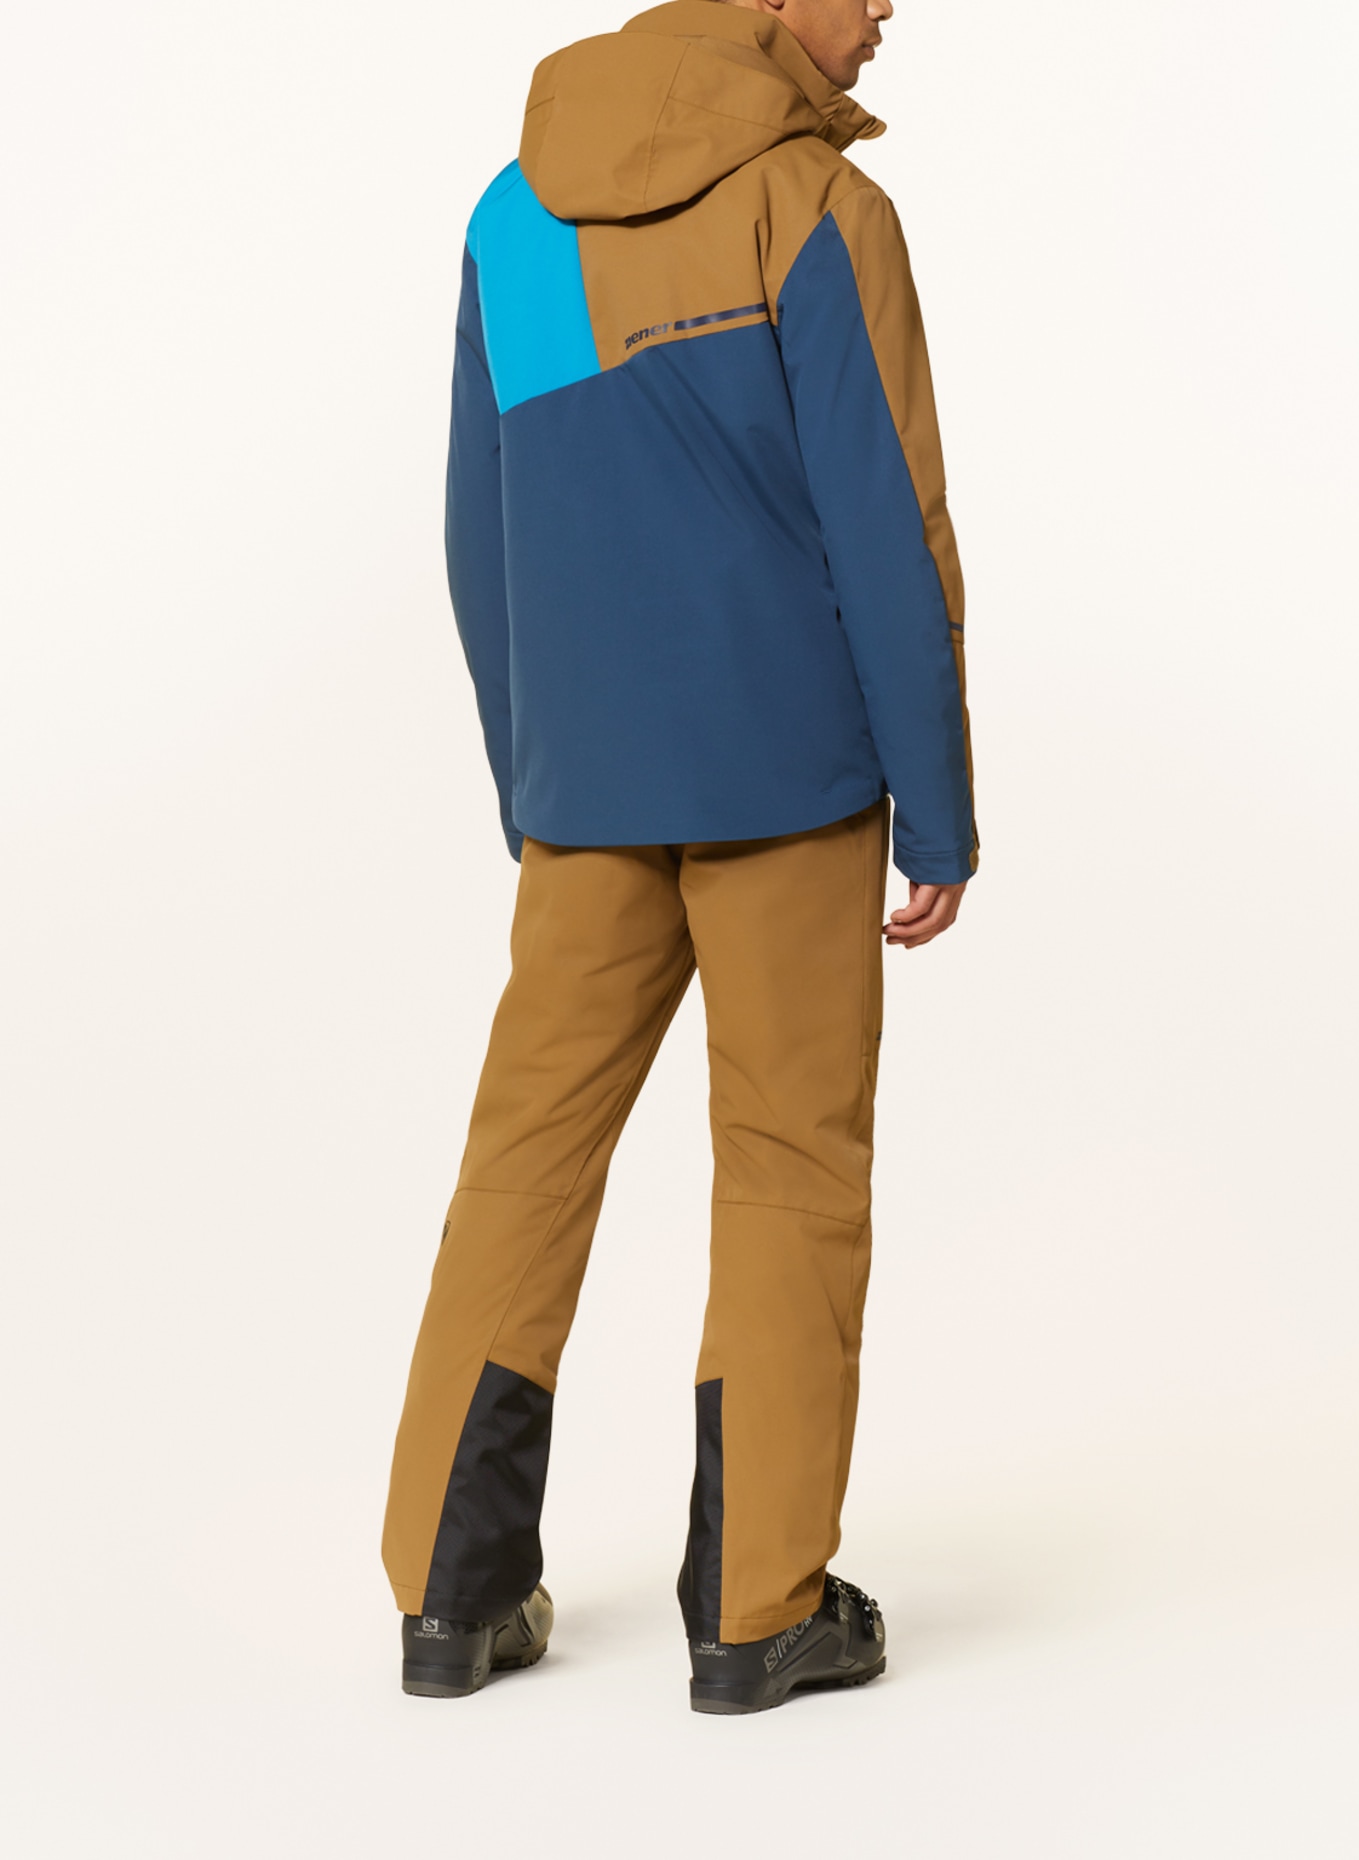 turquoise/ TIMPA blue ziener jacket in Ski olive/ dark